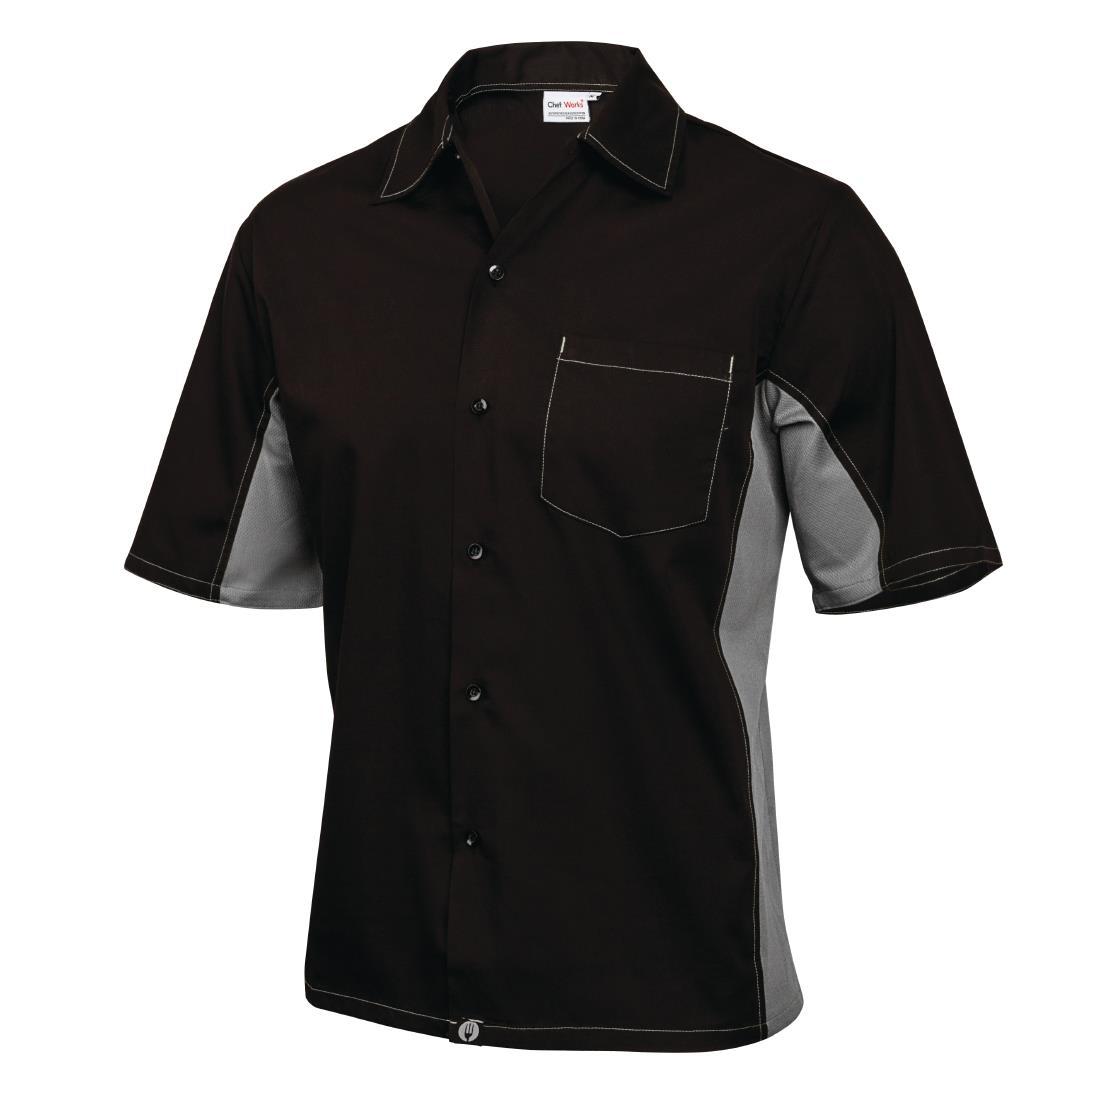 Chef Works Unisex Contrast Shirt Black and Grey XL - A948-XL  - 2